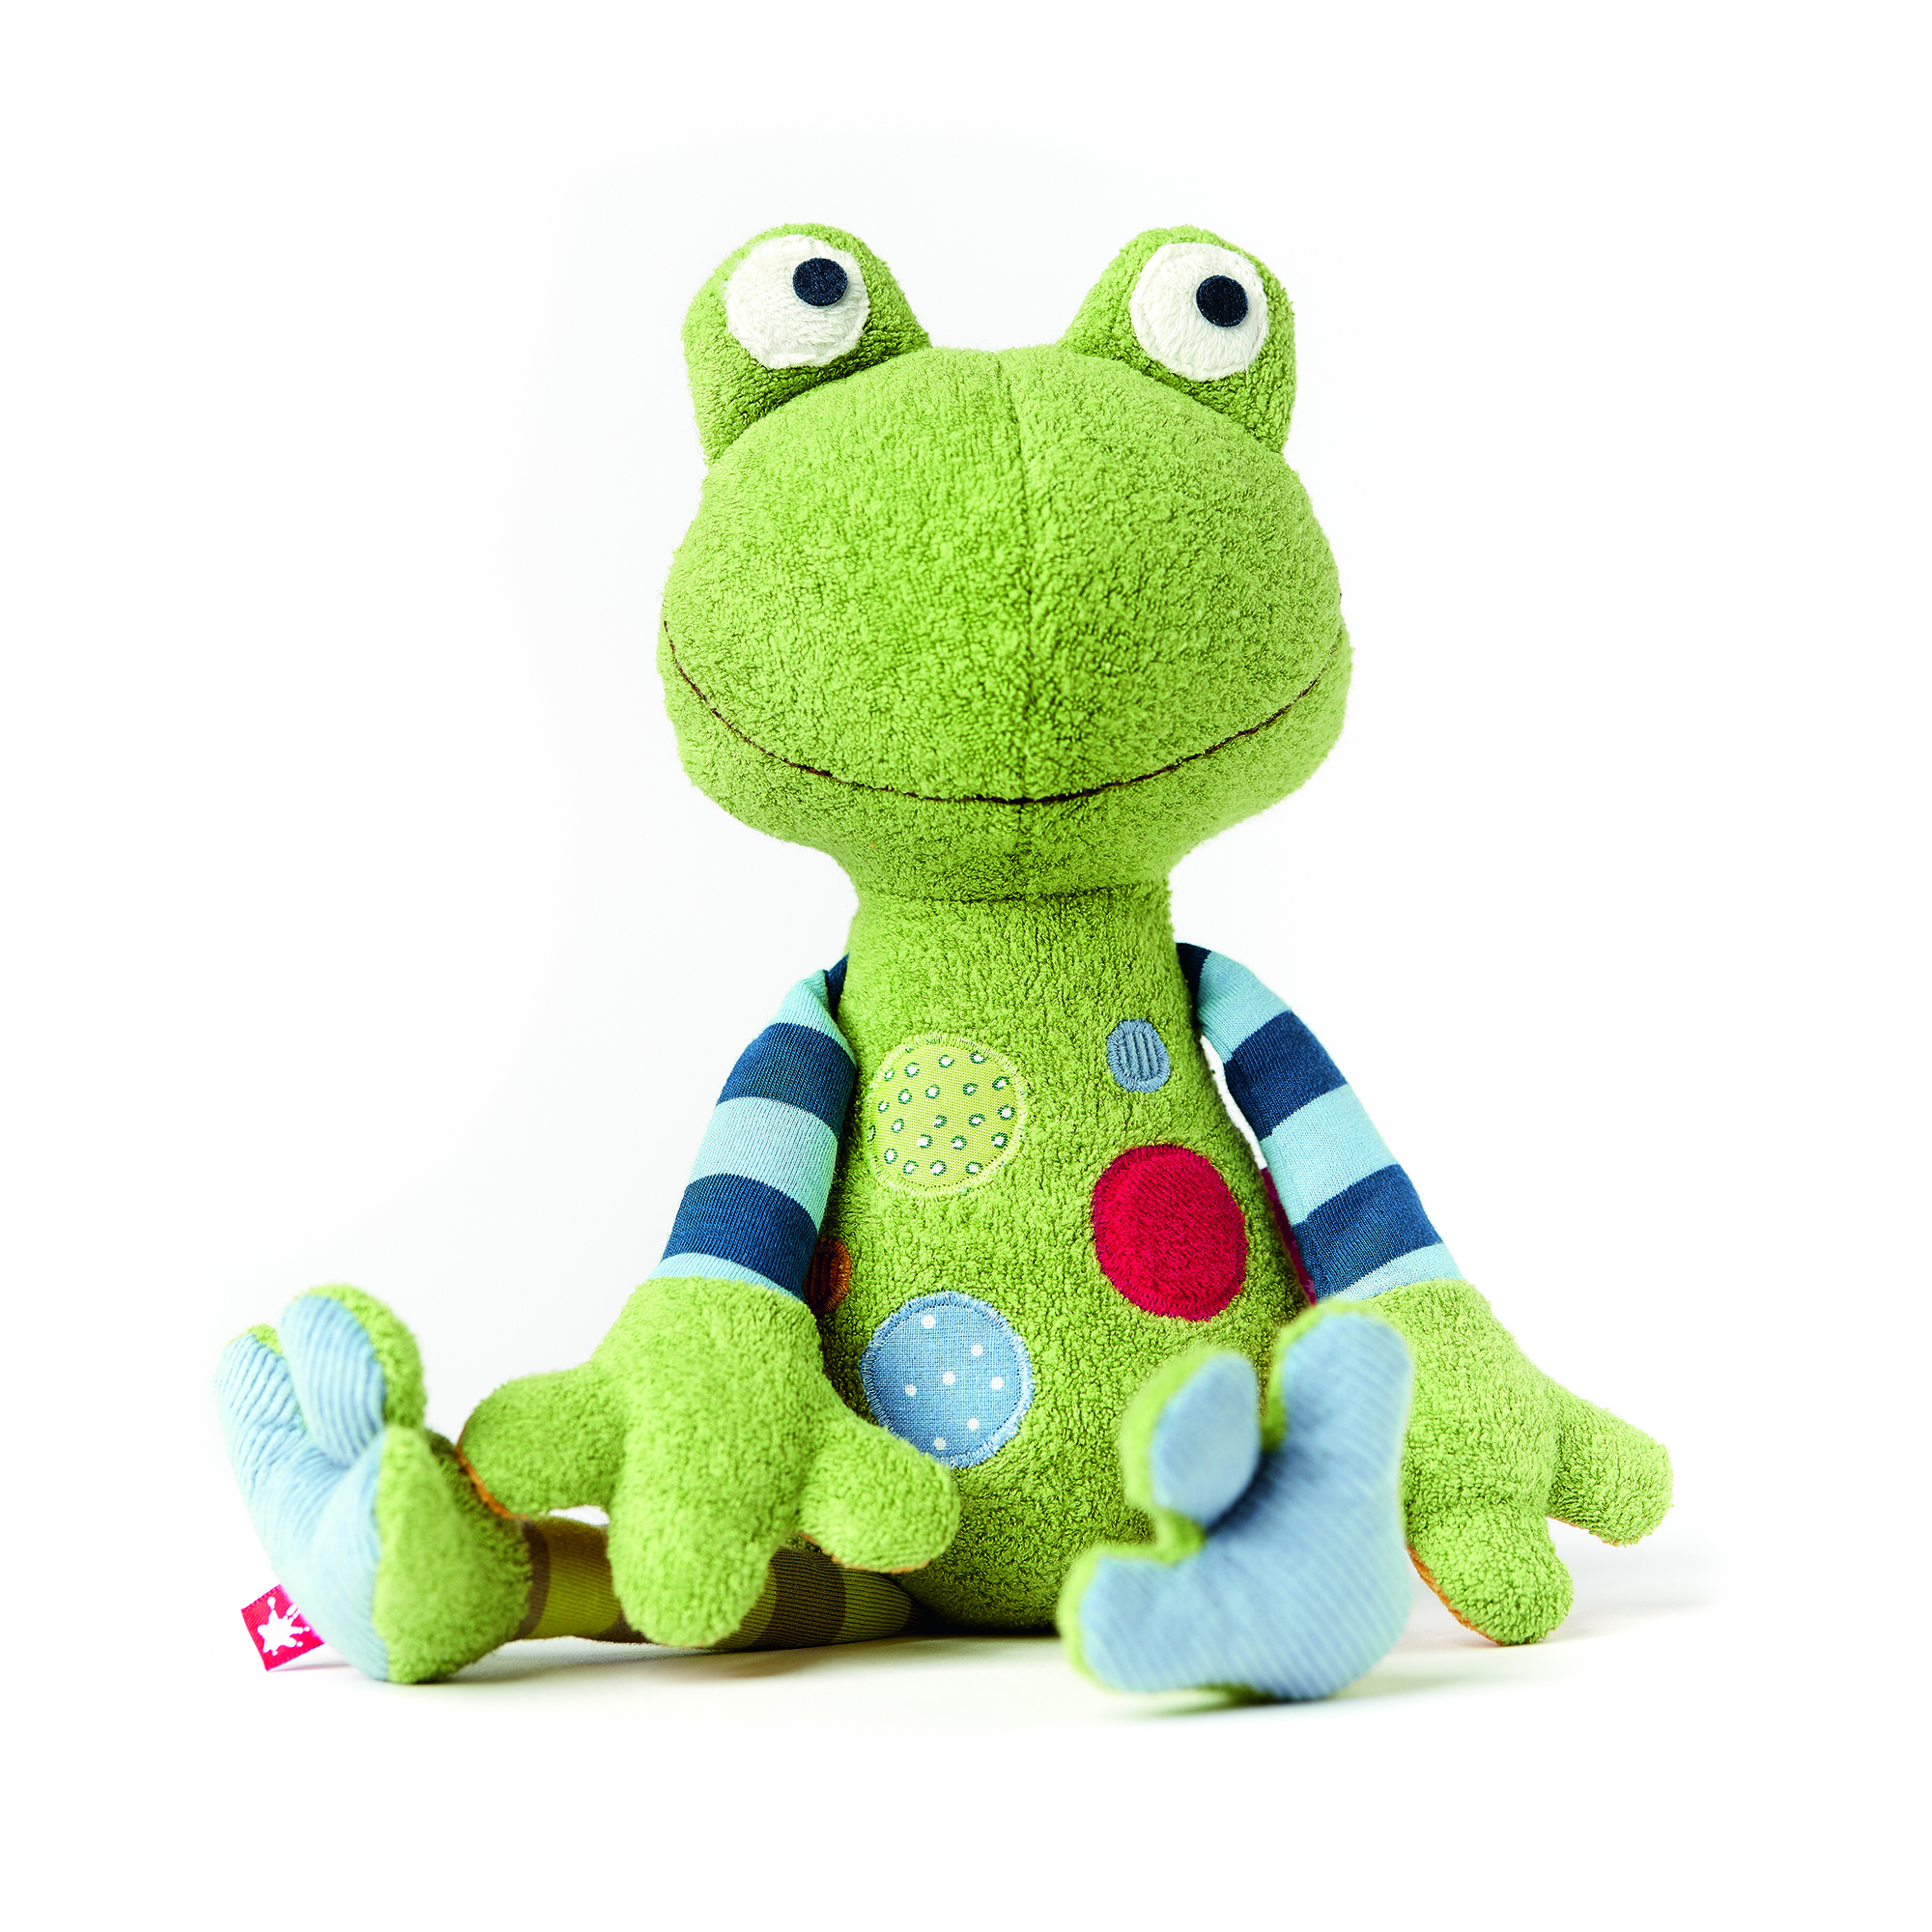 Plush frog, patchwork design